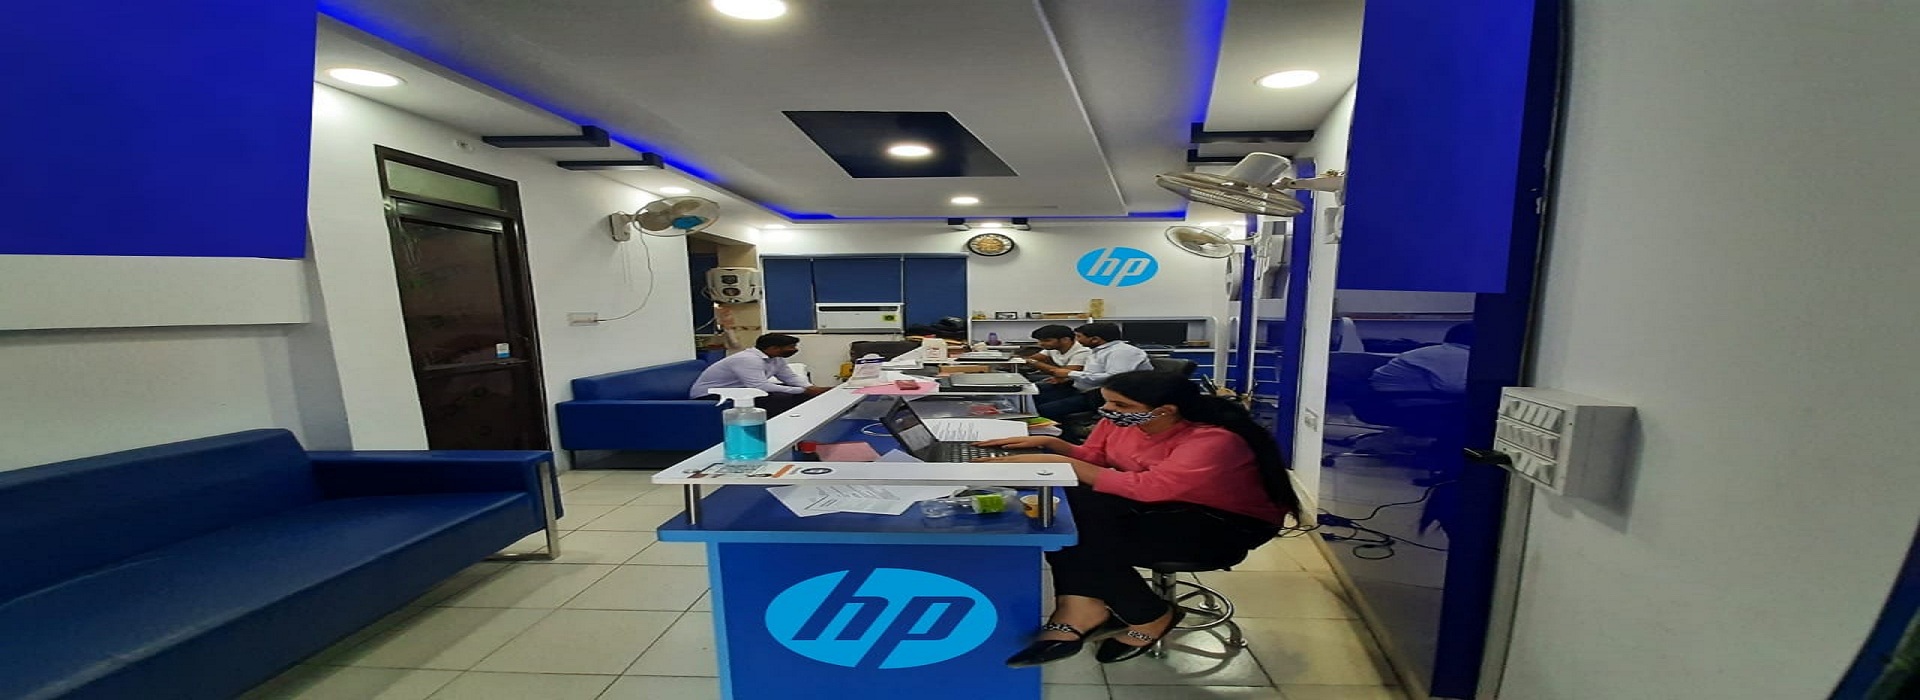 hp Service Centre In Rajendra Nagar